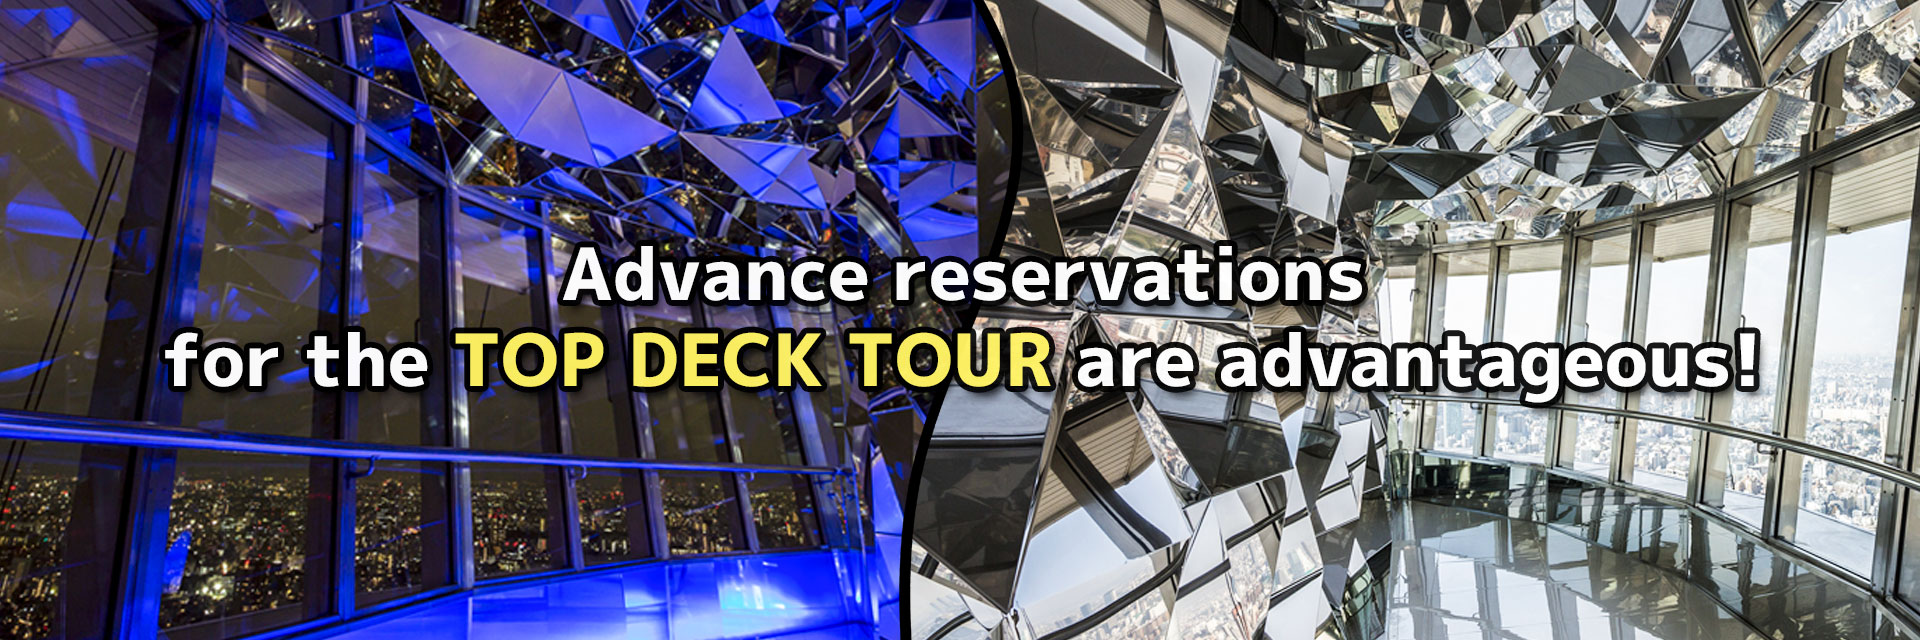 Advance reservations are advantageous for the TOP DECK TOUR!